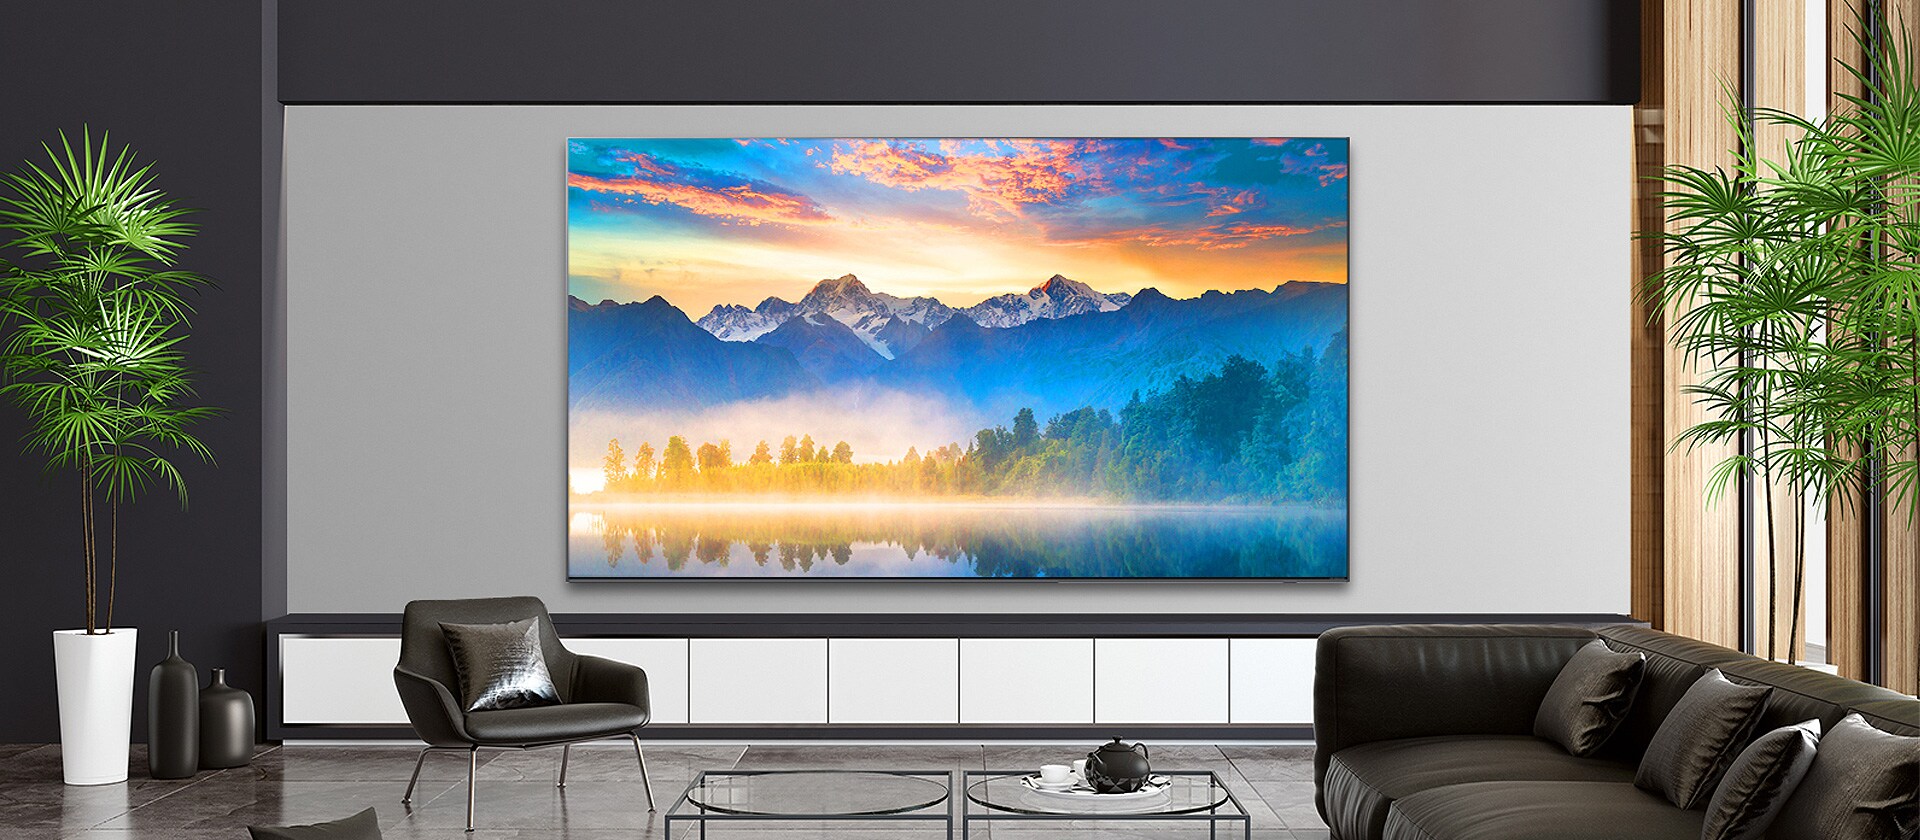 Dnevna soba s televizorom montiranim na zid na kojem je prikazana scena iz prirode.